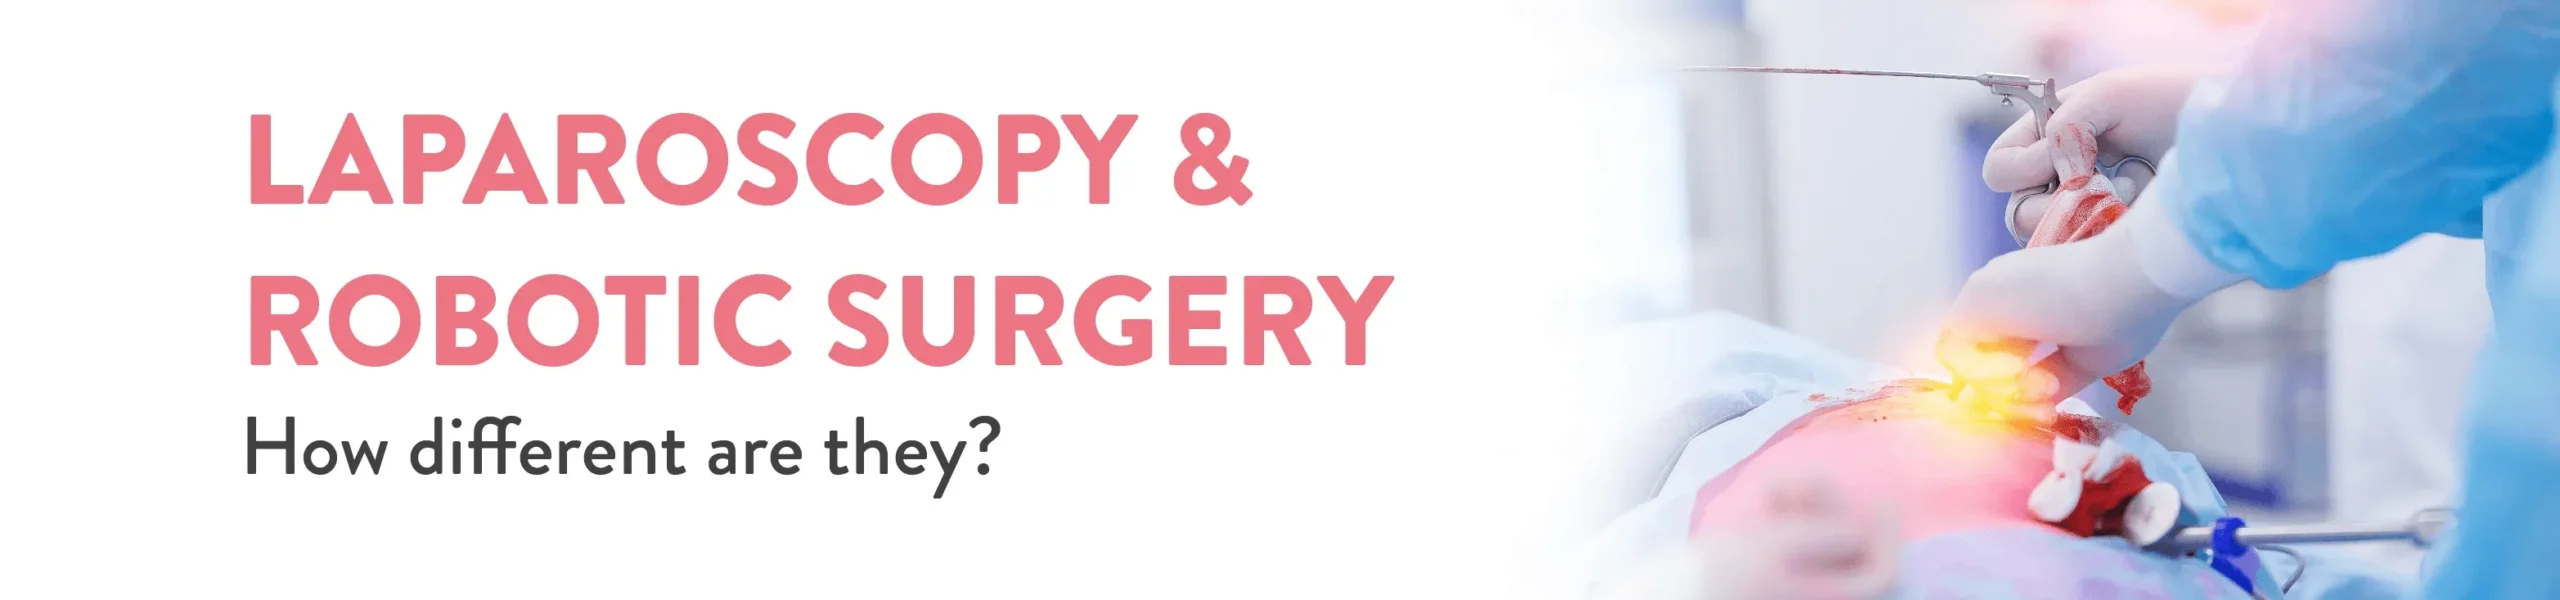 Laparoscopy and Robotic Surgery